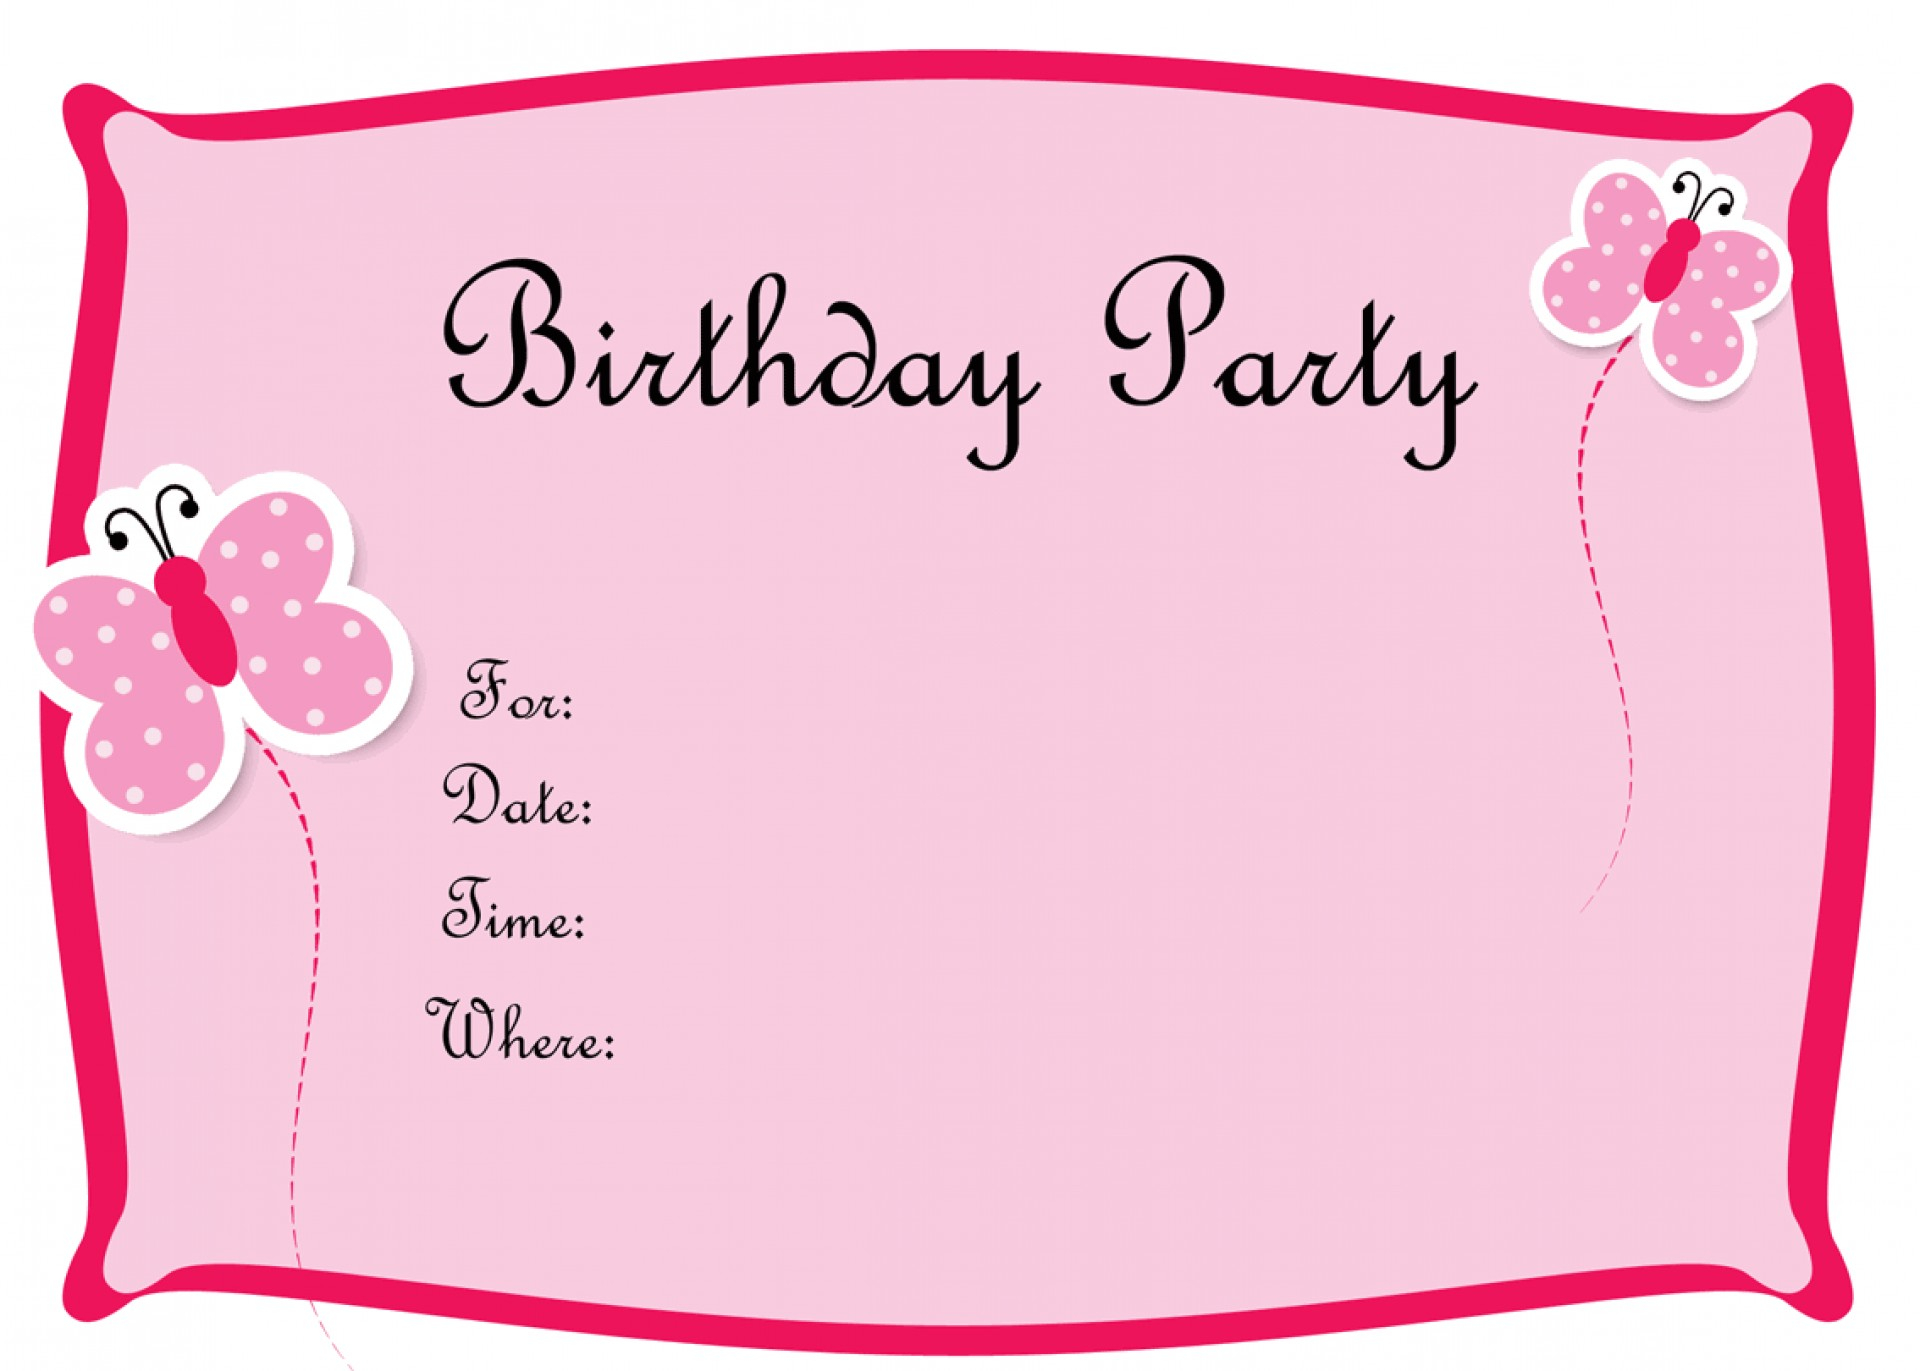 Birthday Invitation Cards Ideas 011 Template Ideas Birthday Invitation Maker Remarkable Card For